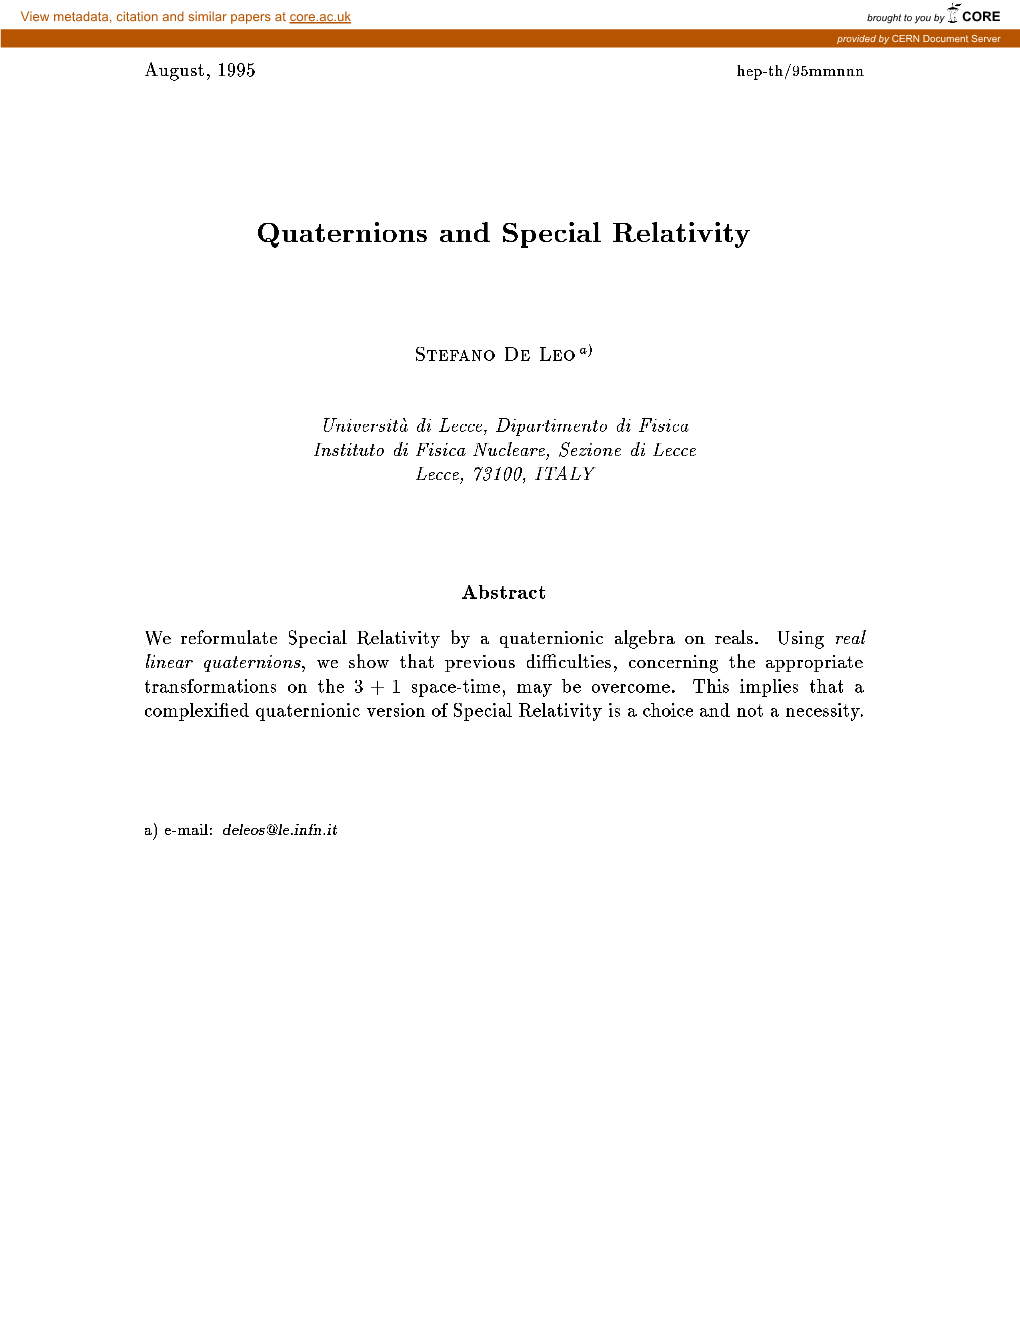 Quaternions and Special Relativity